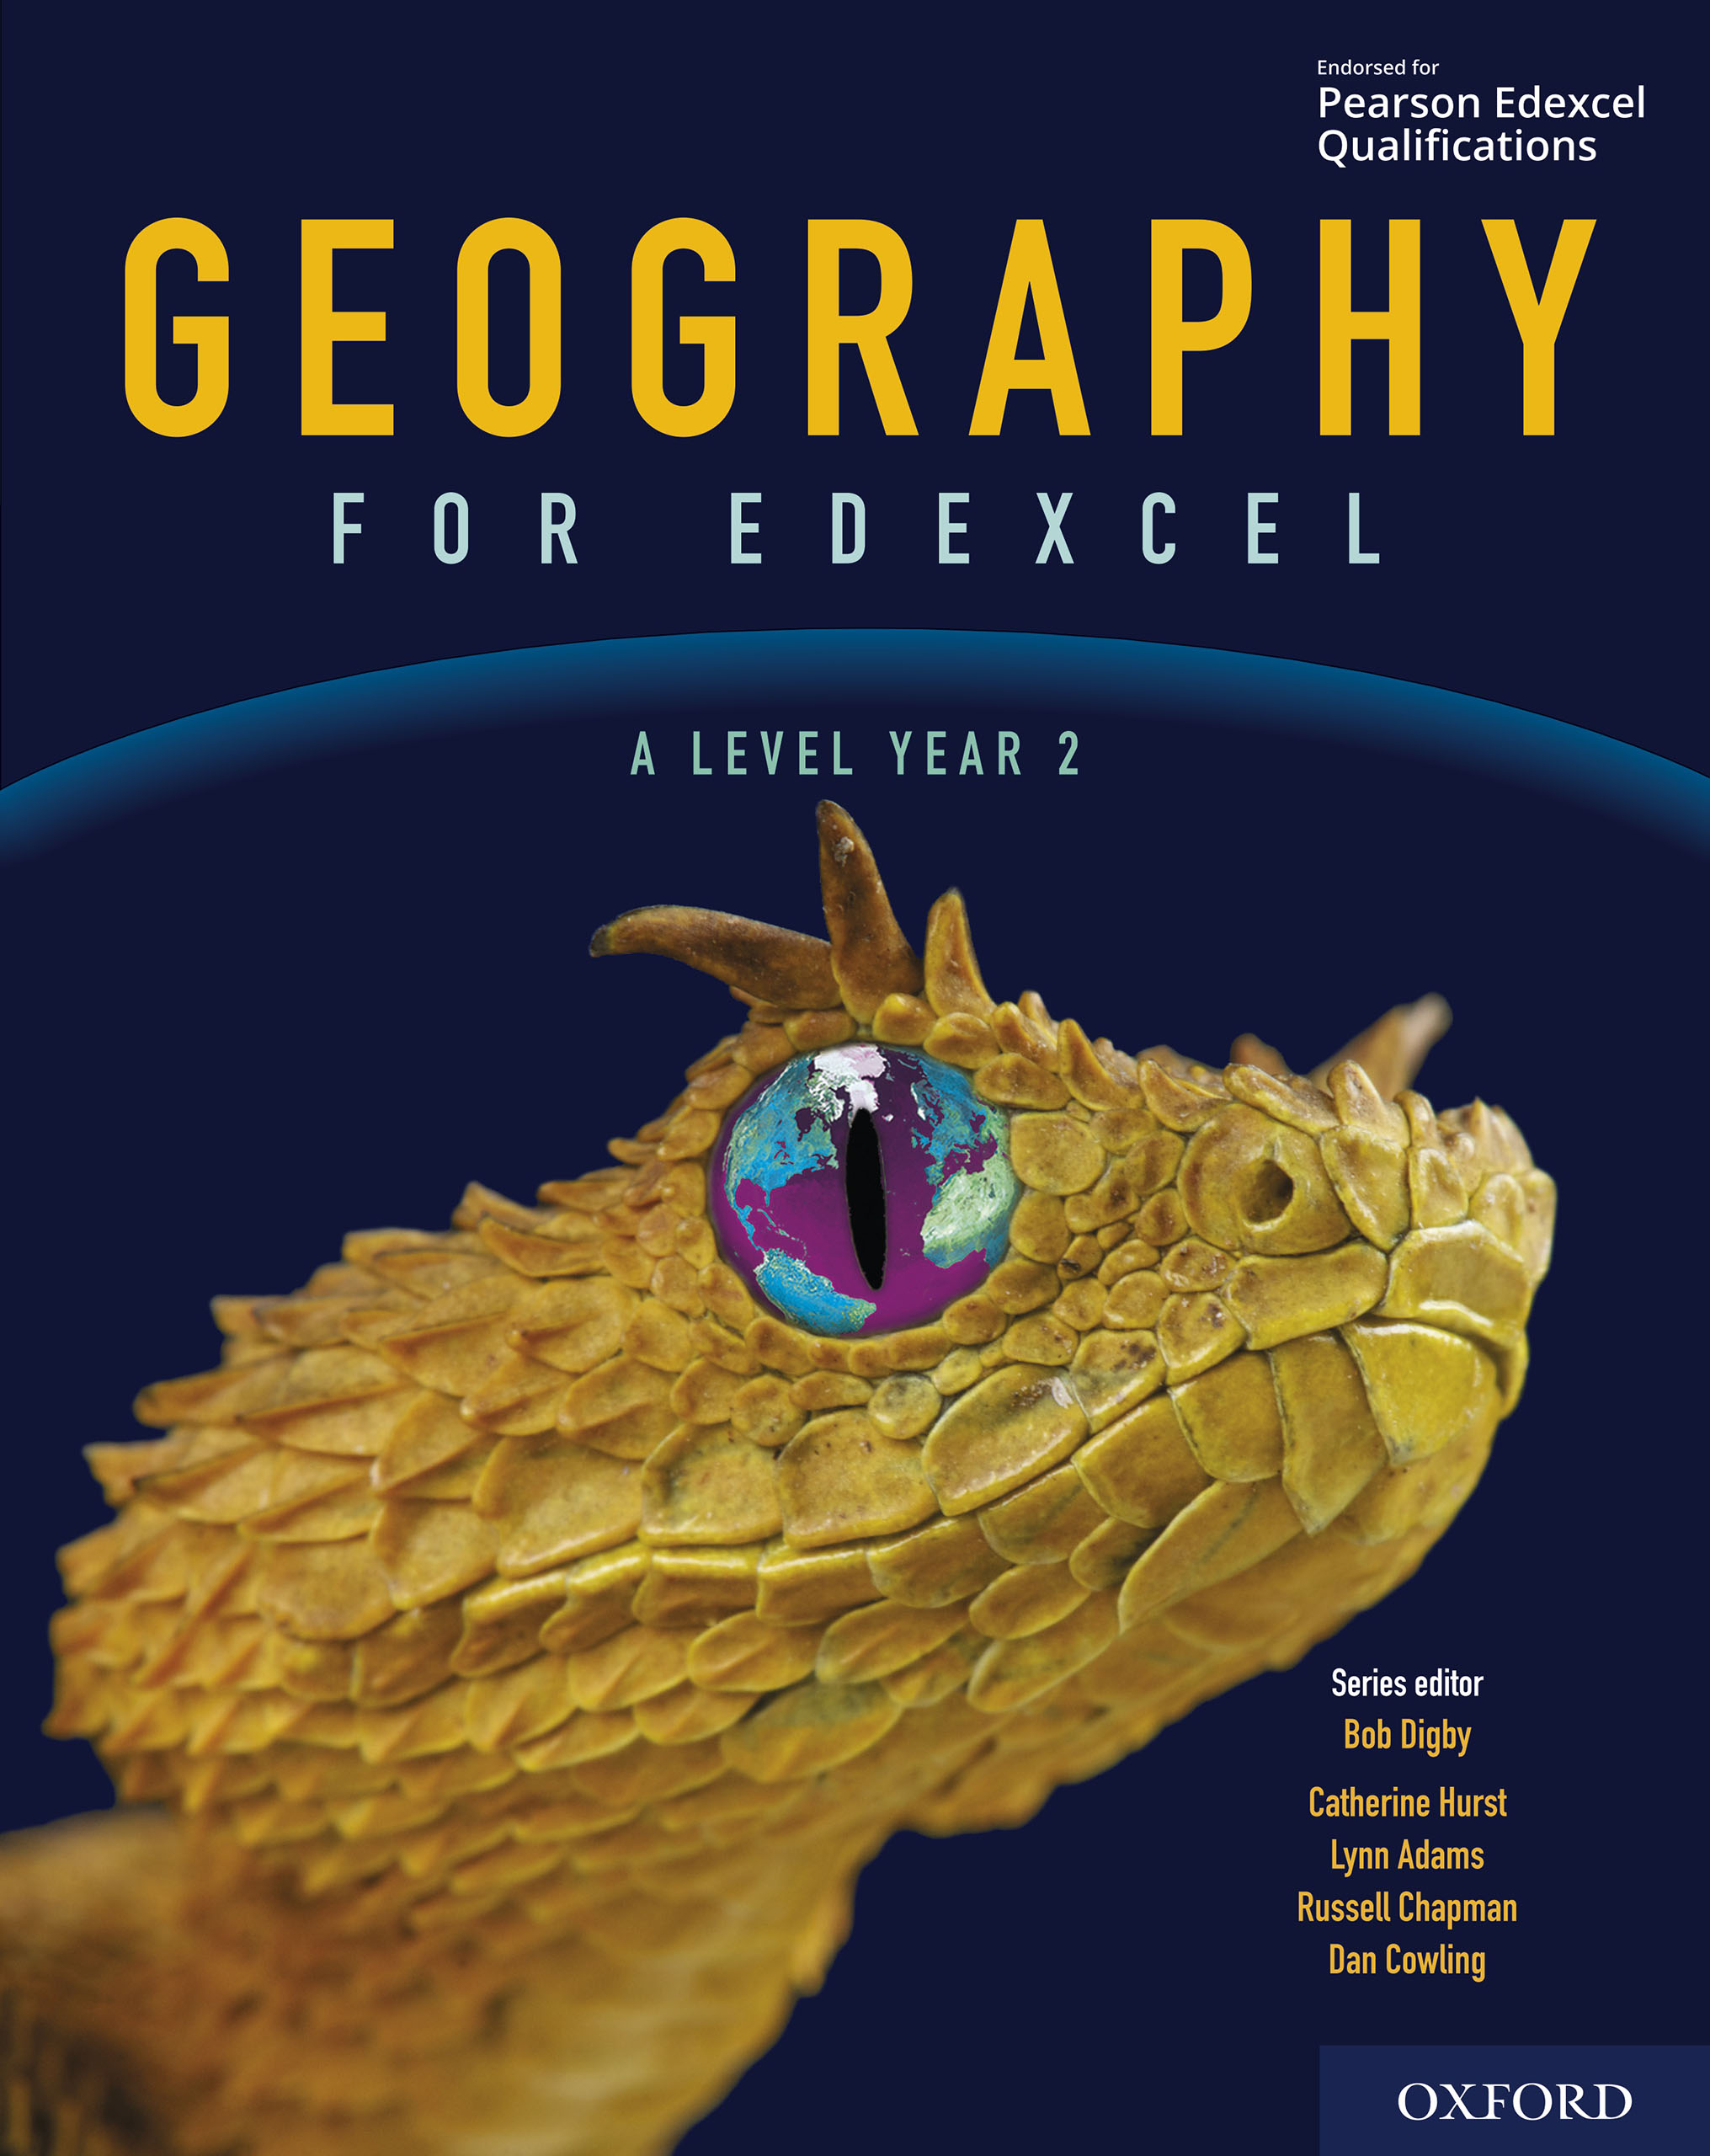 edexcel geography coursework